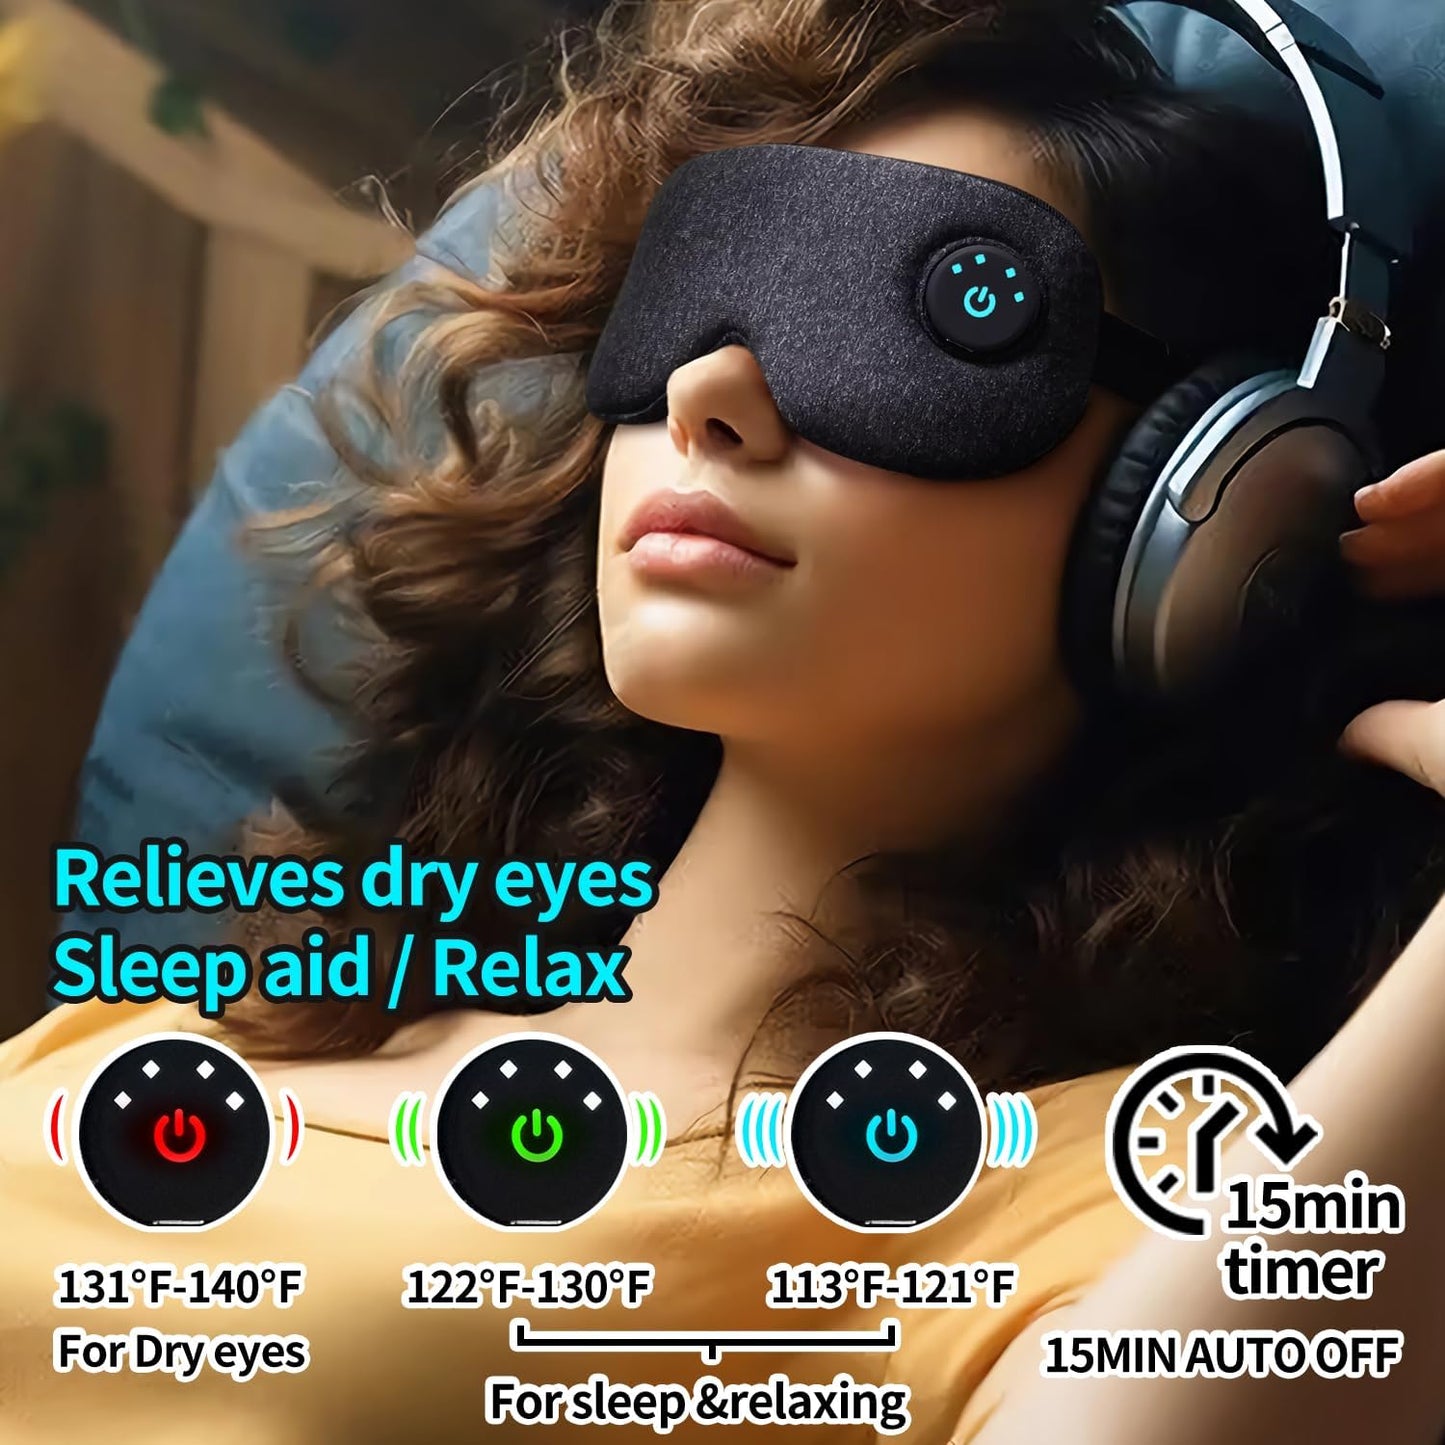 Ewarmer Cordless Heated Eye mask for Dry Eyes, Sleep Eye mask, USB Rechargable Heating Eye Pad with Battery Indicators, Electric Warm Eye Compress for Relief Stye,Gift for Women Men (Black)